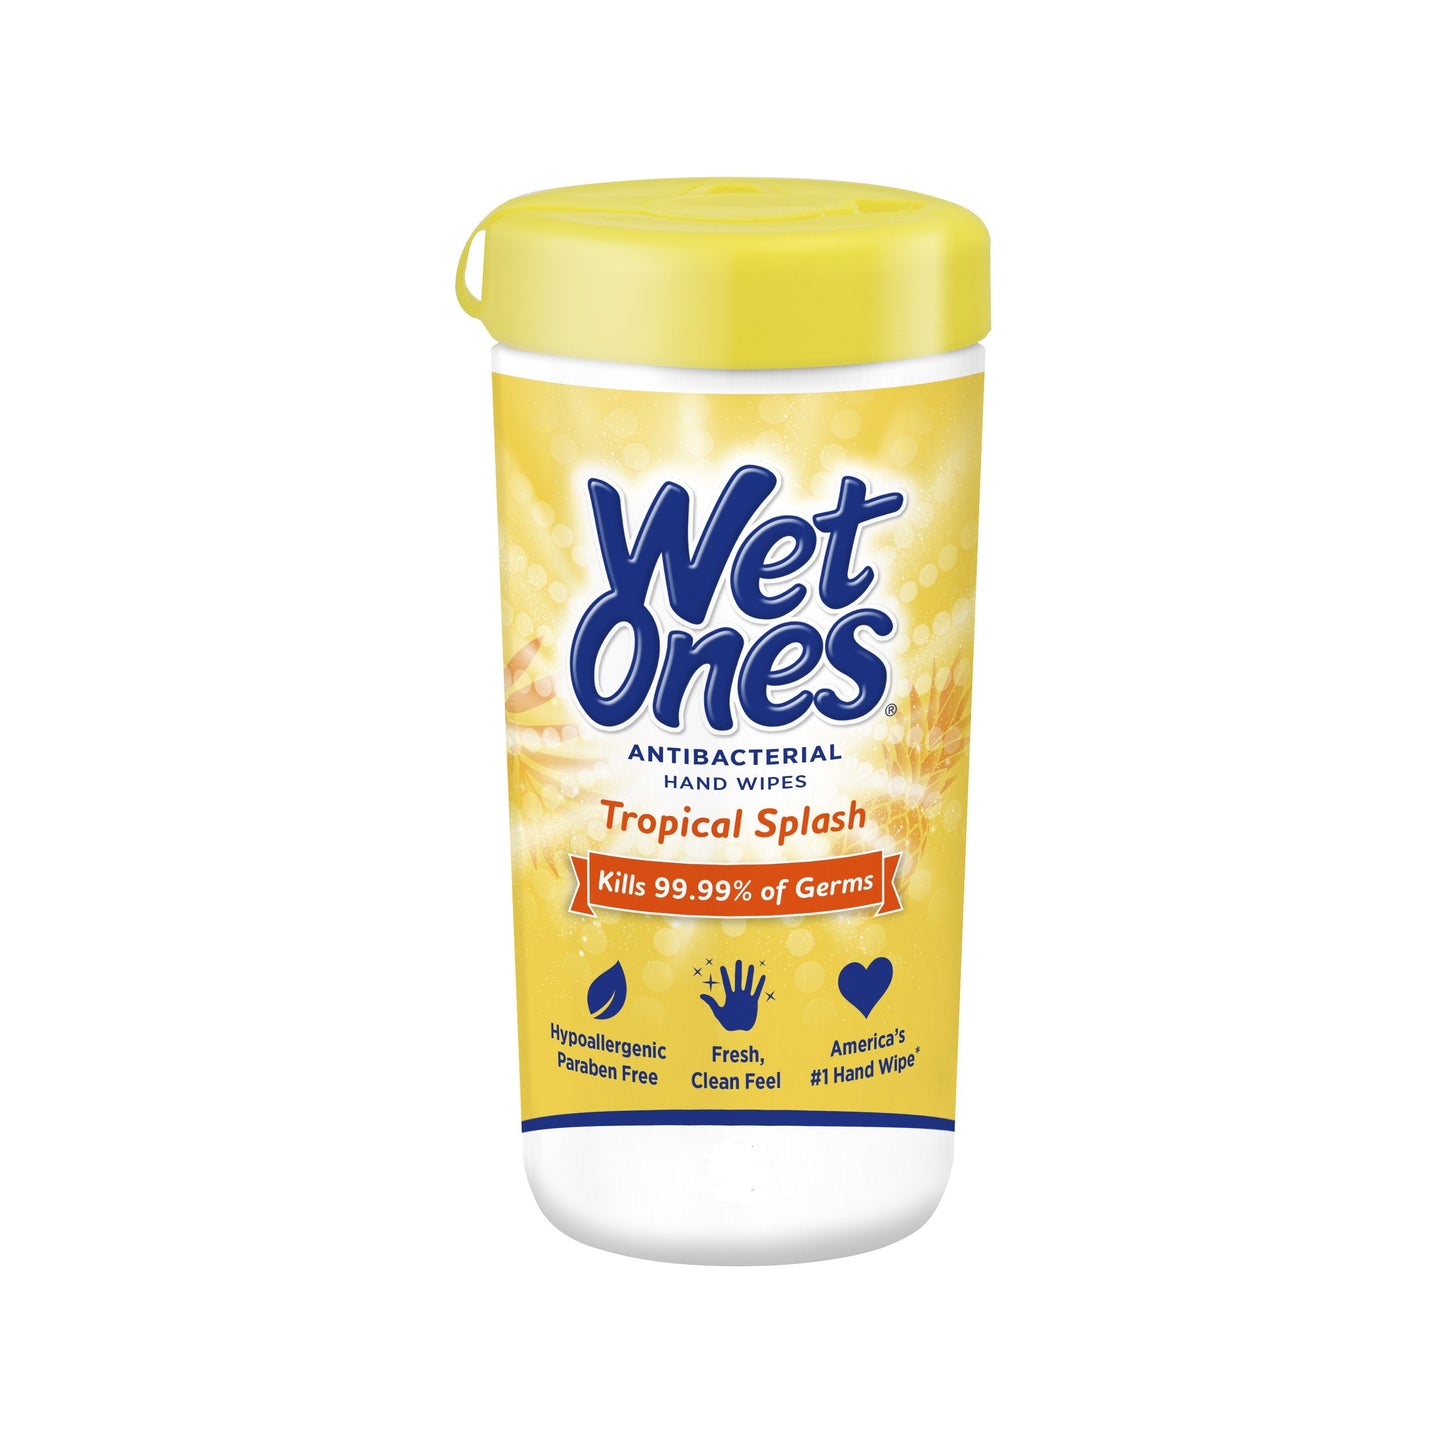 Wet Ones Antibacterial Hand Wipes 40ct (2 pack), Tropical Splash